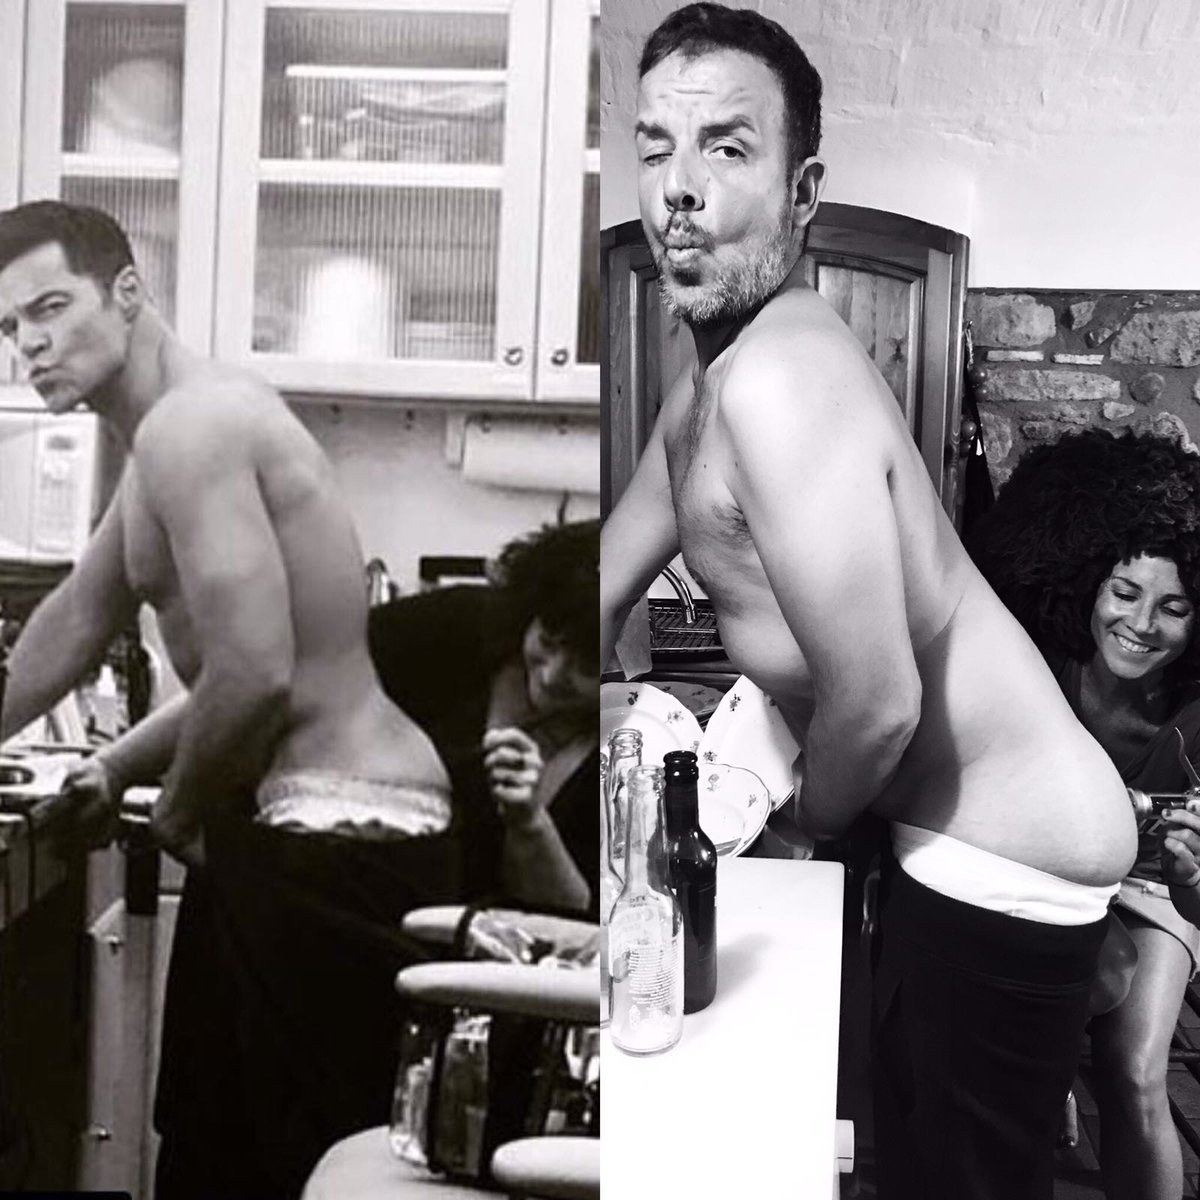 El desnudo de Àngel Llàcer para imitar a Velencoso y Ricky Martin